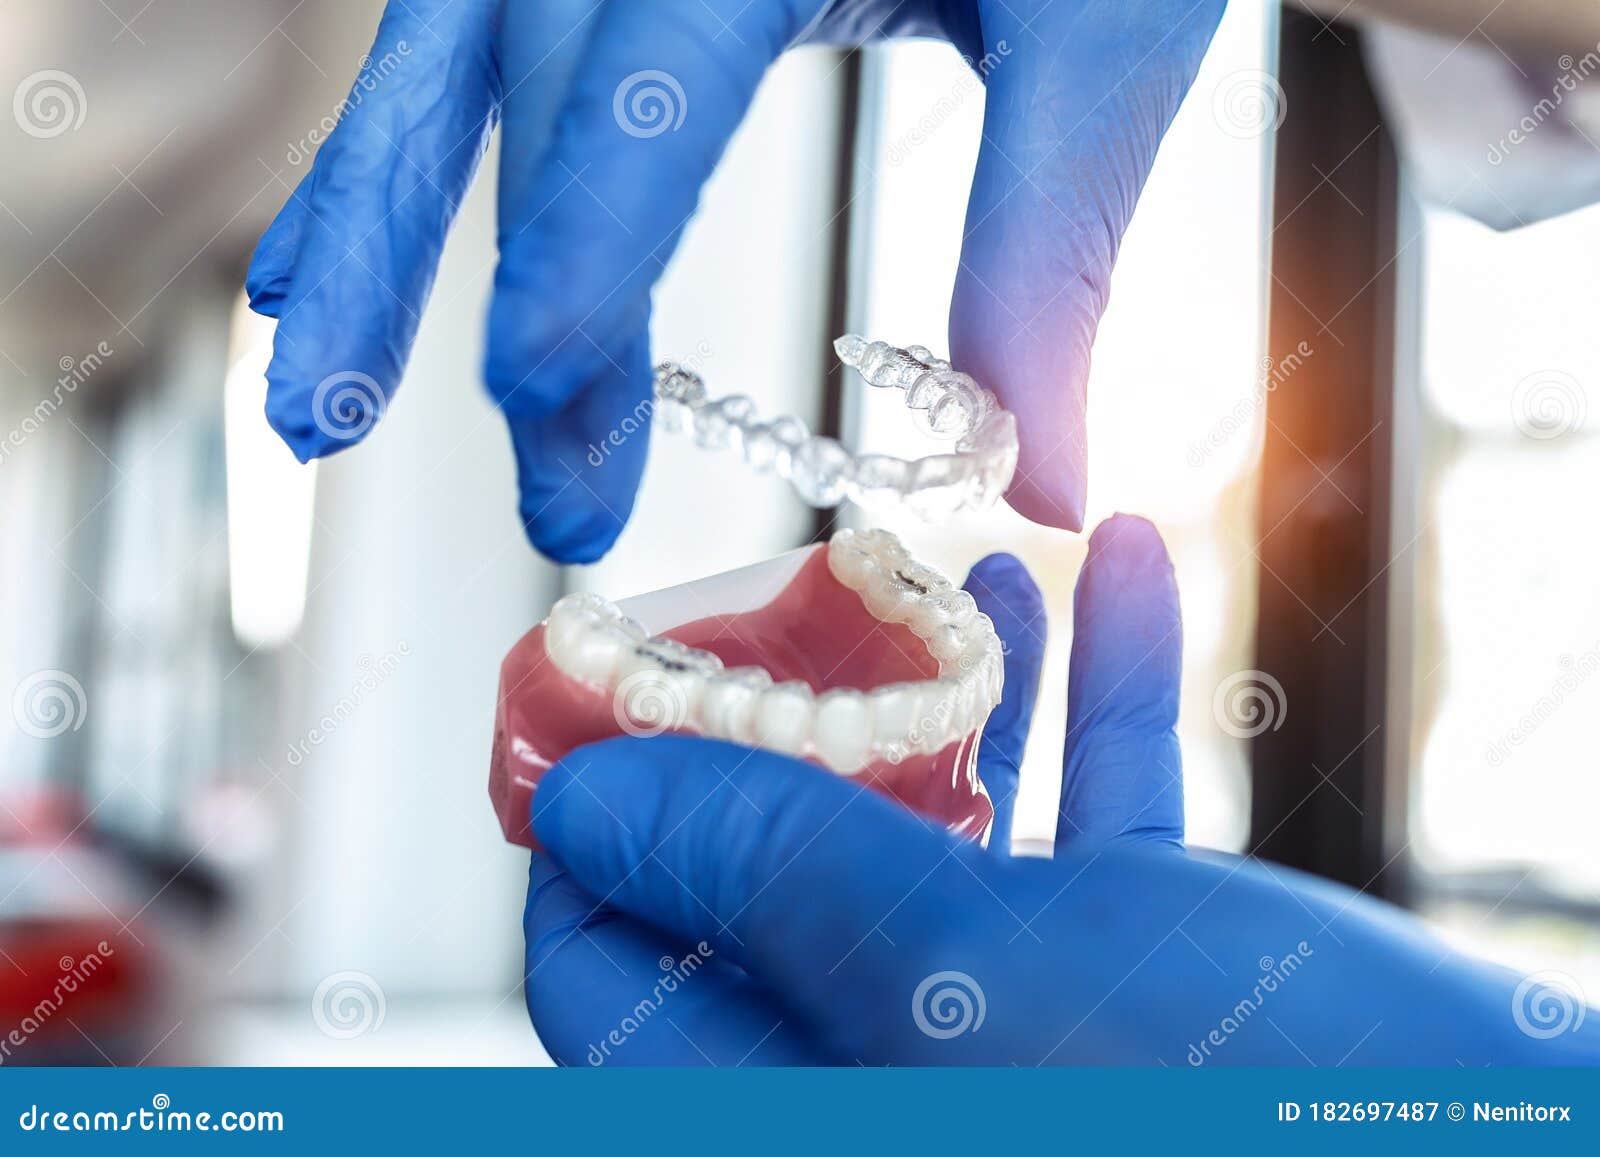 the doctorÃ¢â¬â¢s hands in blue gloves hold an artificial model of the jaw with invisible braces. the dentist shows an example of